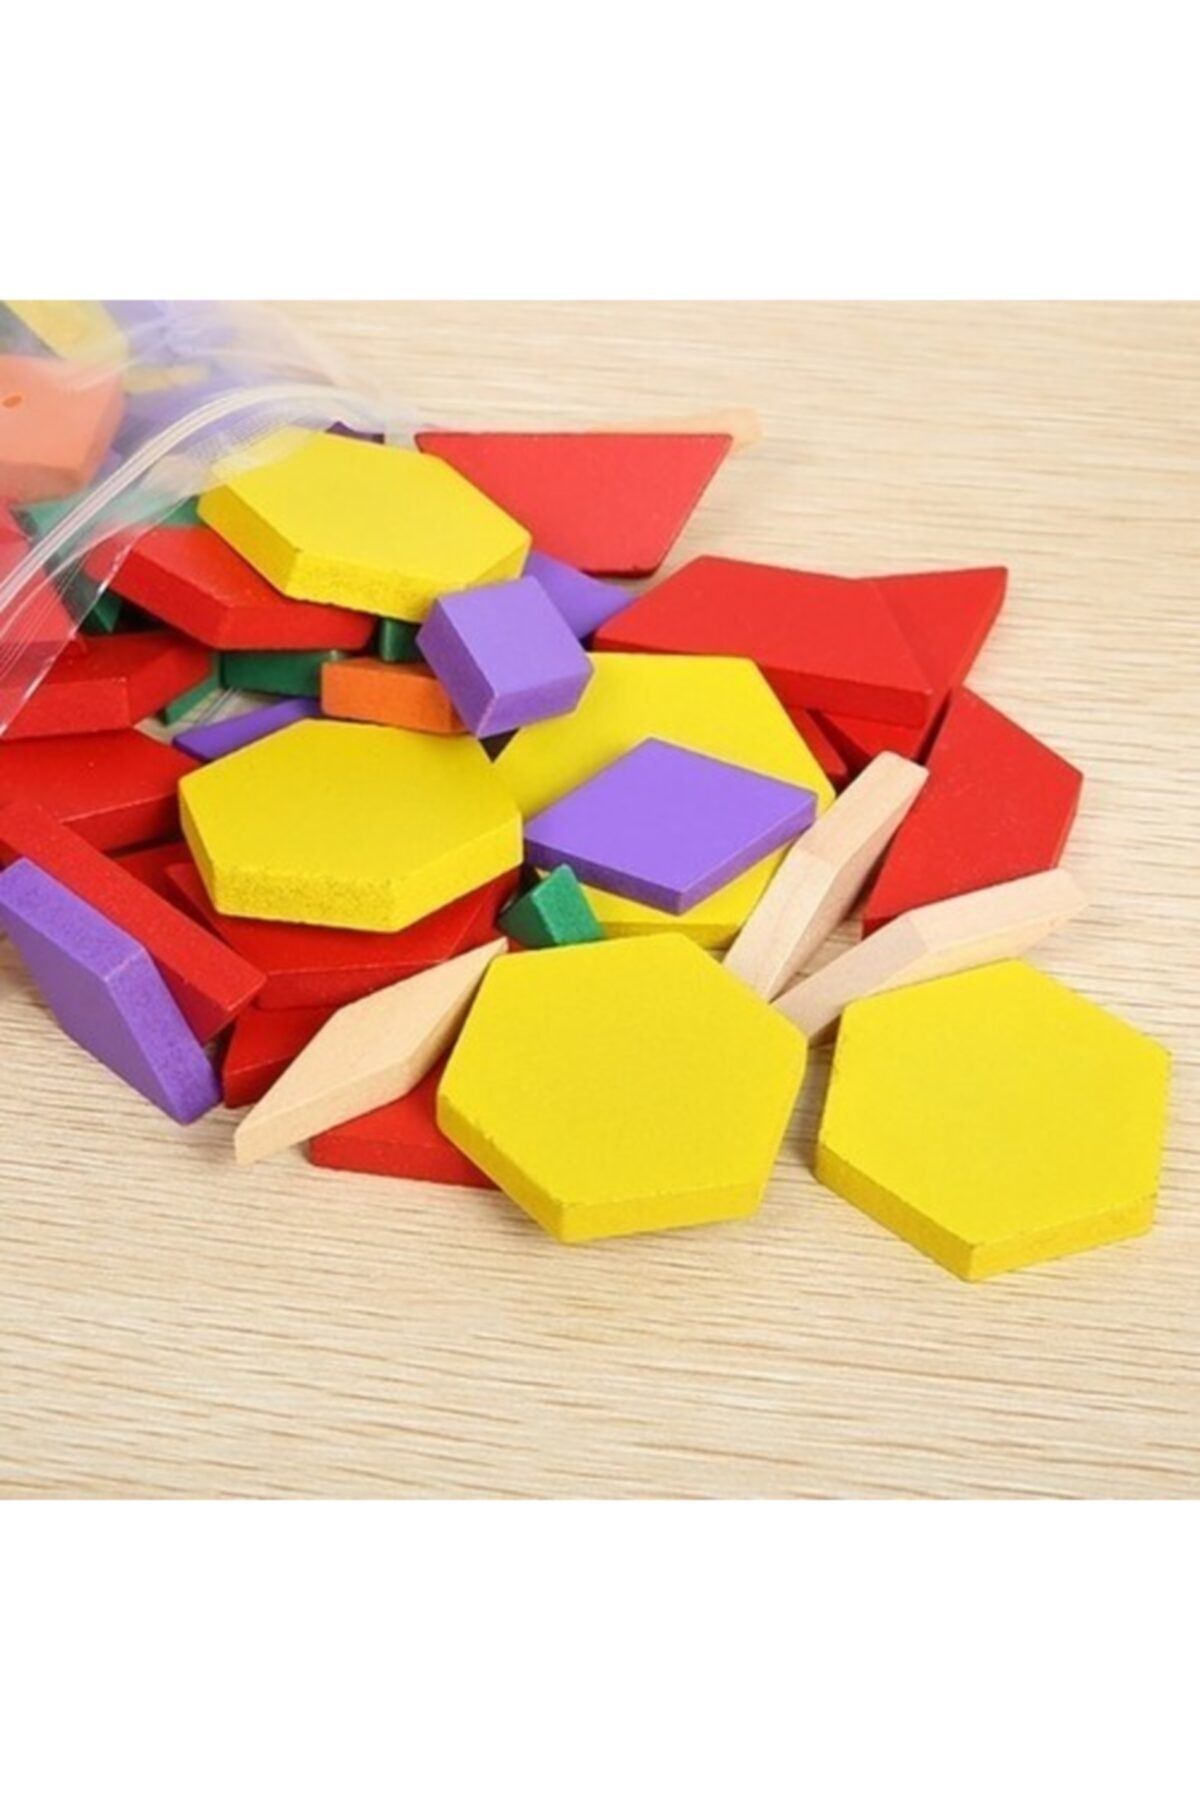 Montessori Ahşap Renkli 125 Parça Ahşap Eğitici Tangram Puzzle Blok Seti